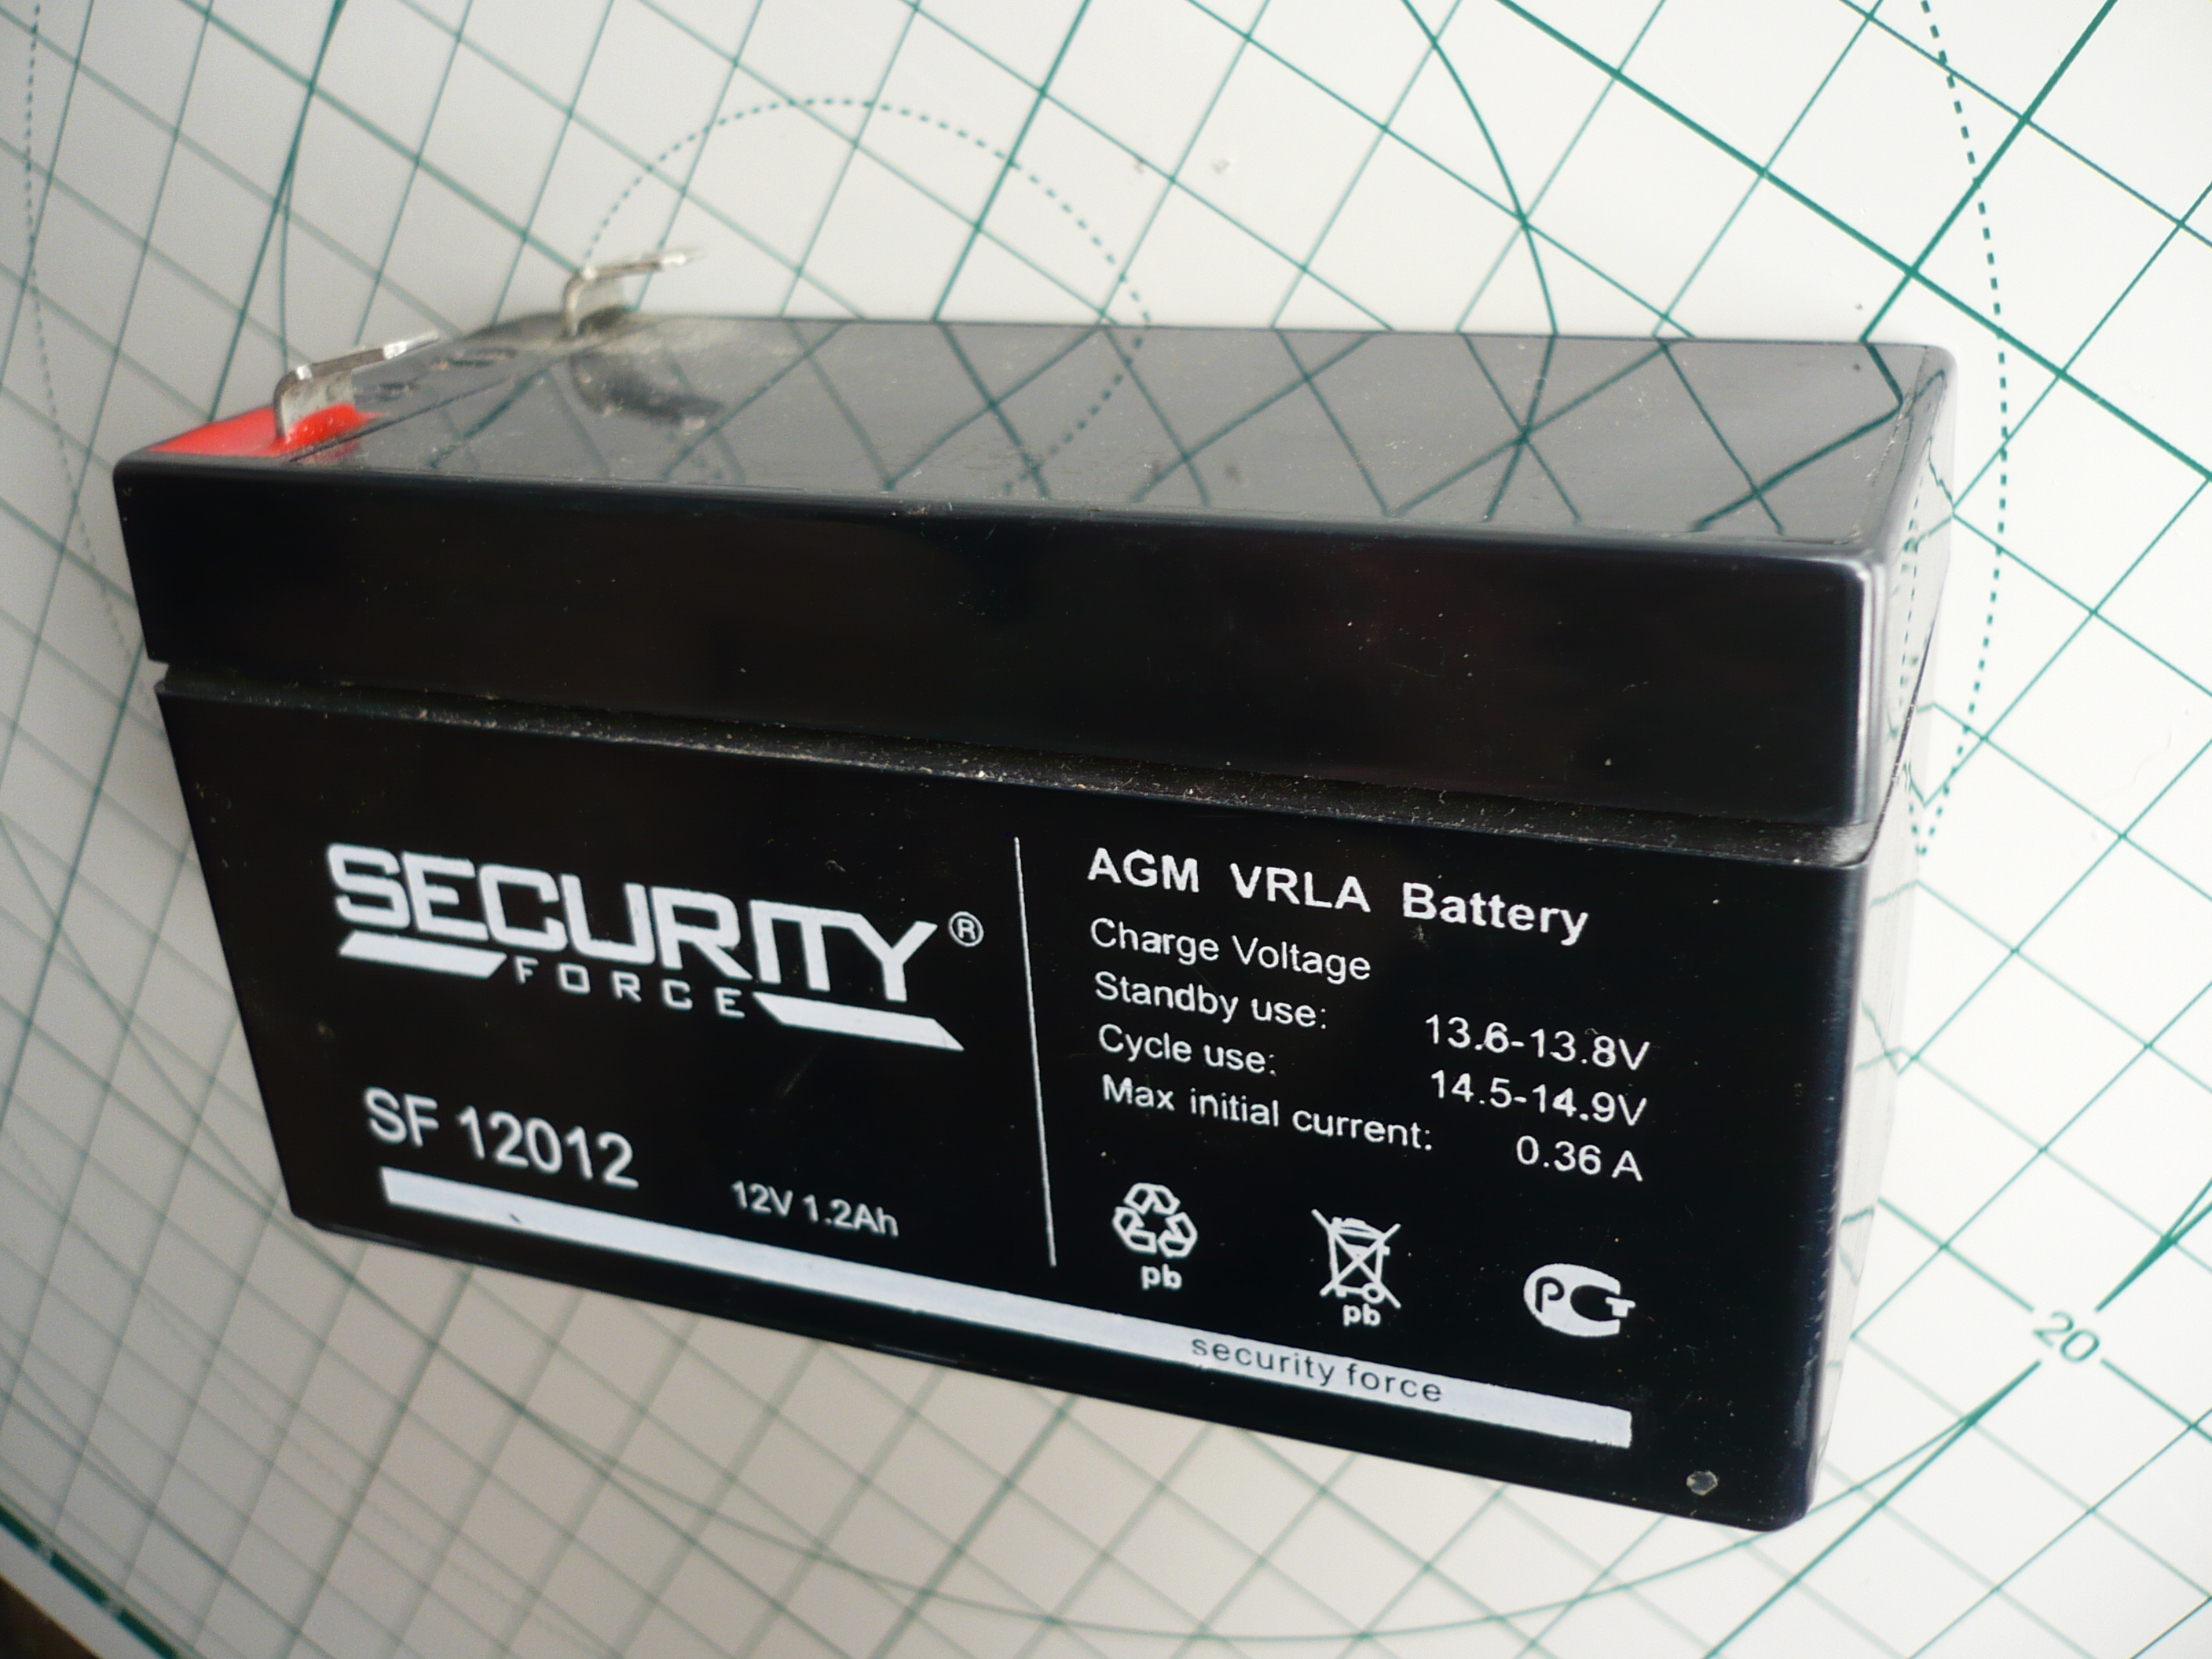 Security Force аккумулятор 12v/7ah AGM VRLA. Заряжаем аккумулятор AGM 12v. Батарея w b r AGM VRLA Battery. Райдер АГМ аккумулятор. Agm battery